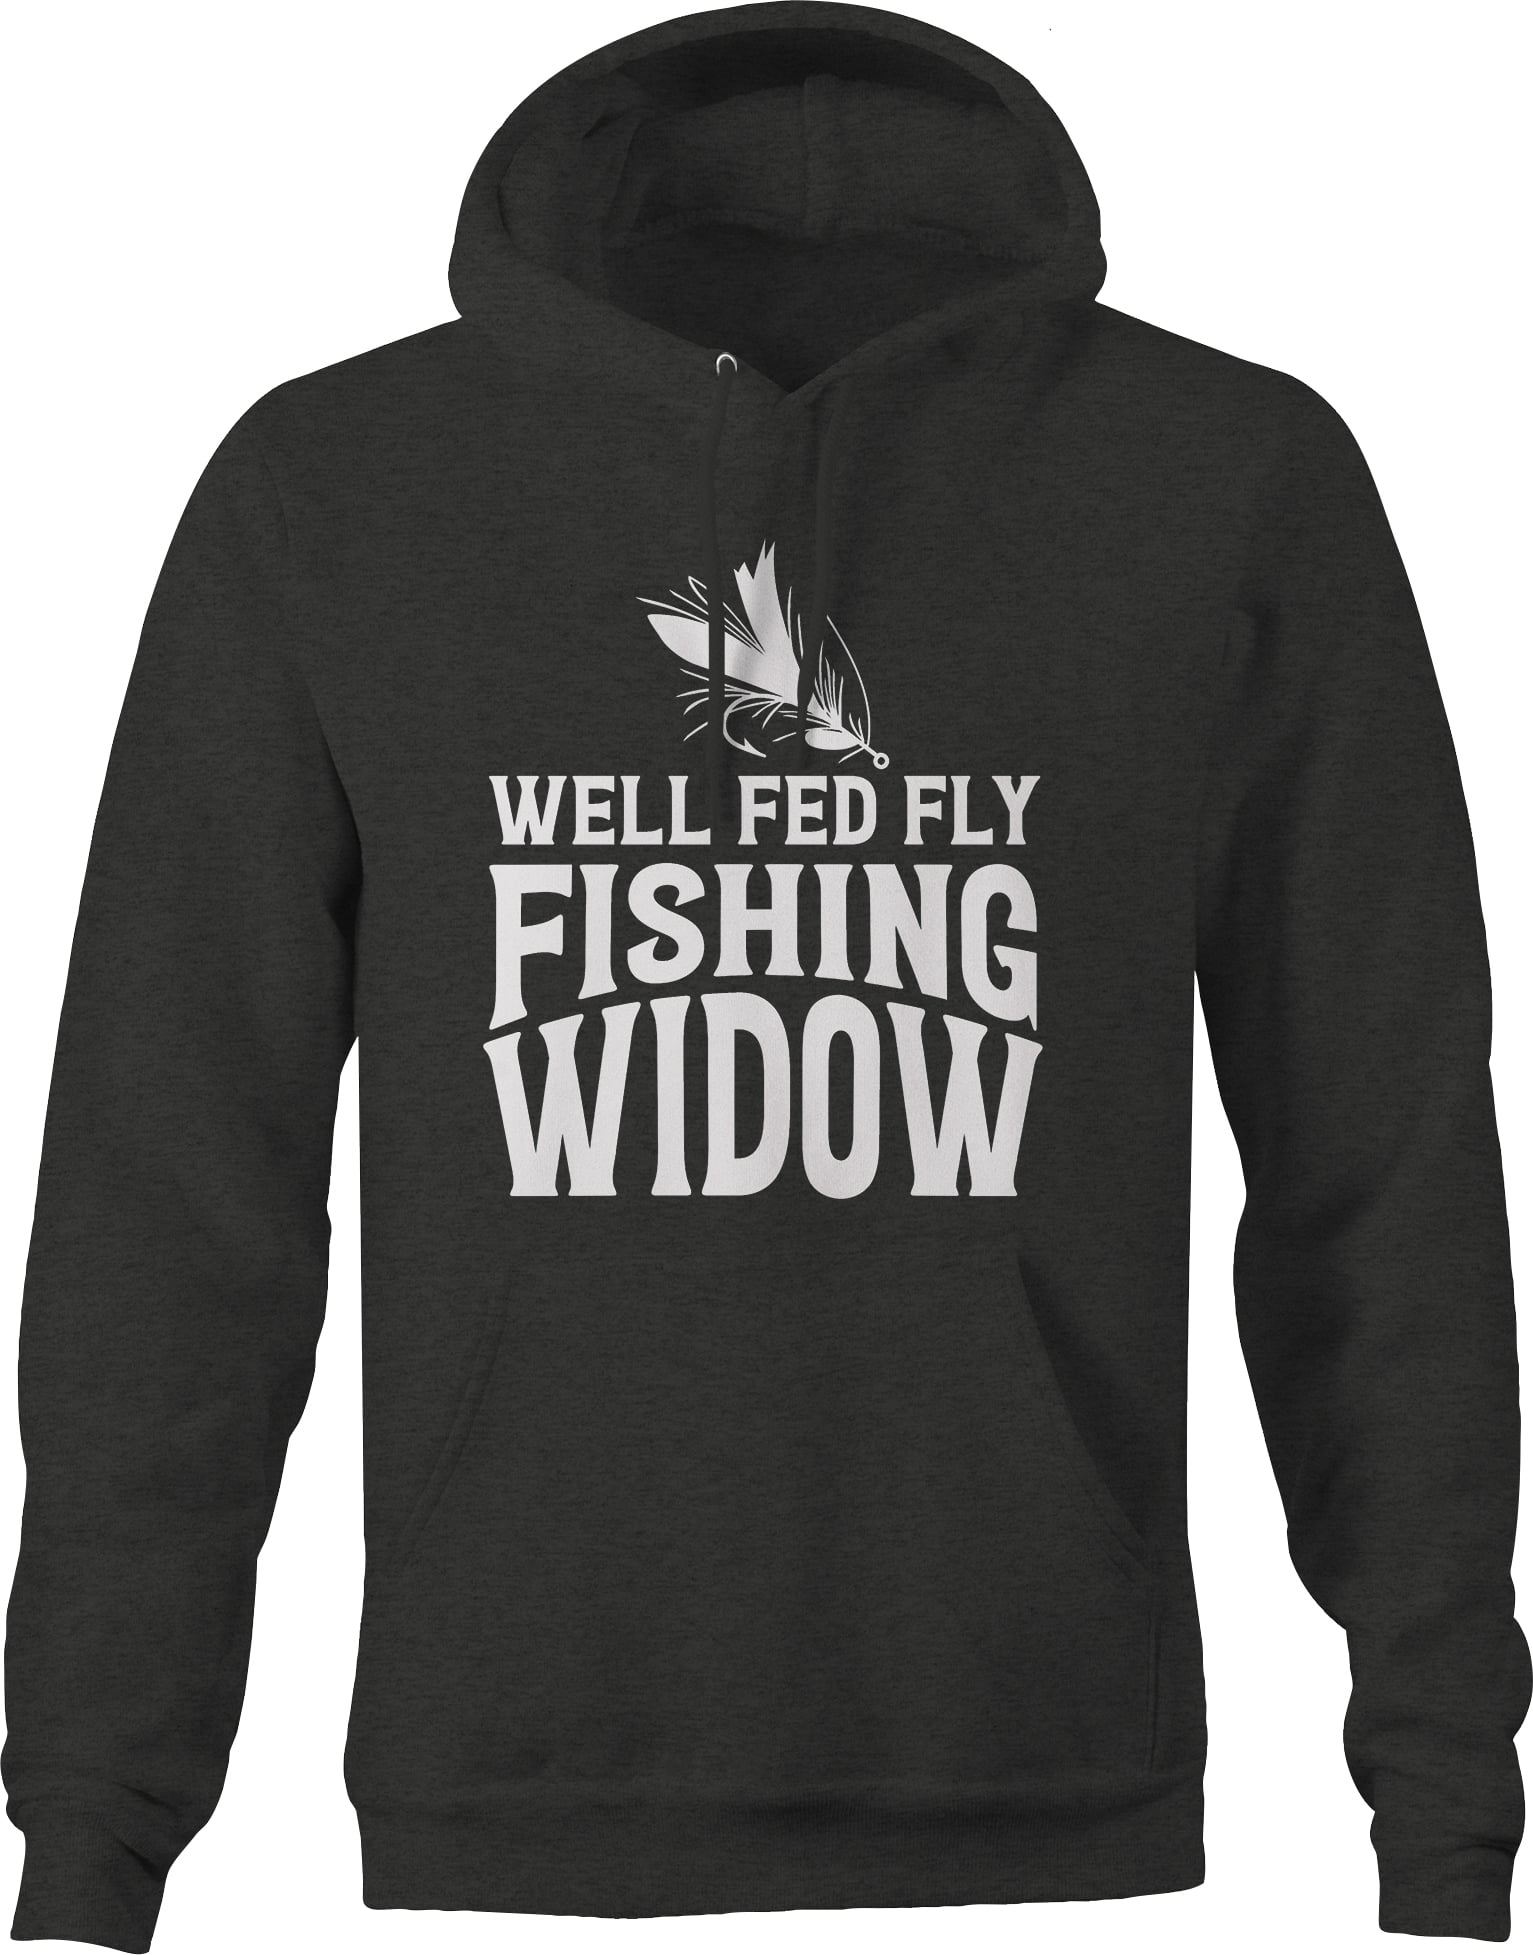 Ink Up America Well Fed Fly Fishing Widow Wife Sweatshirt for Men Small Dark Gray, adult unisex